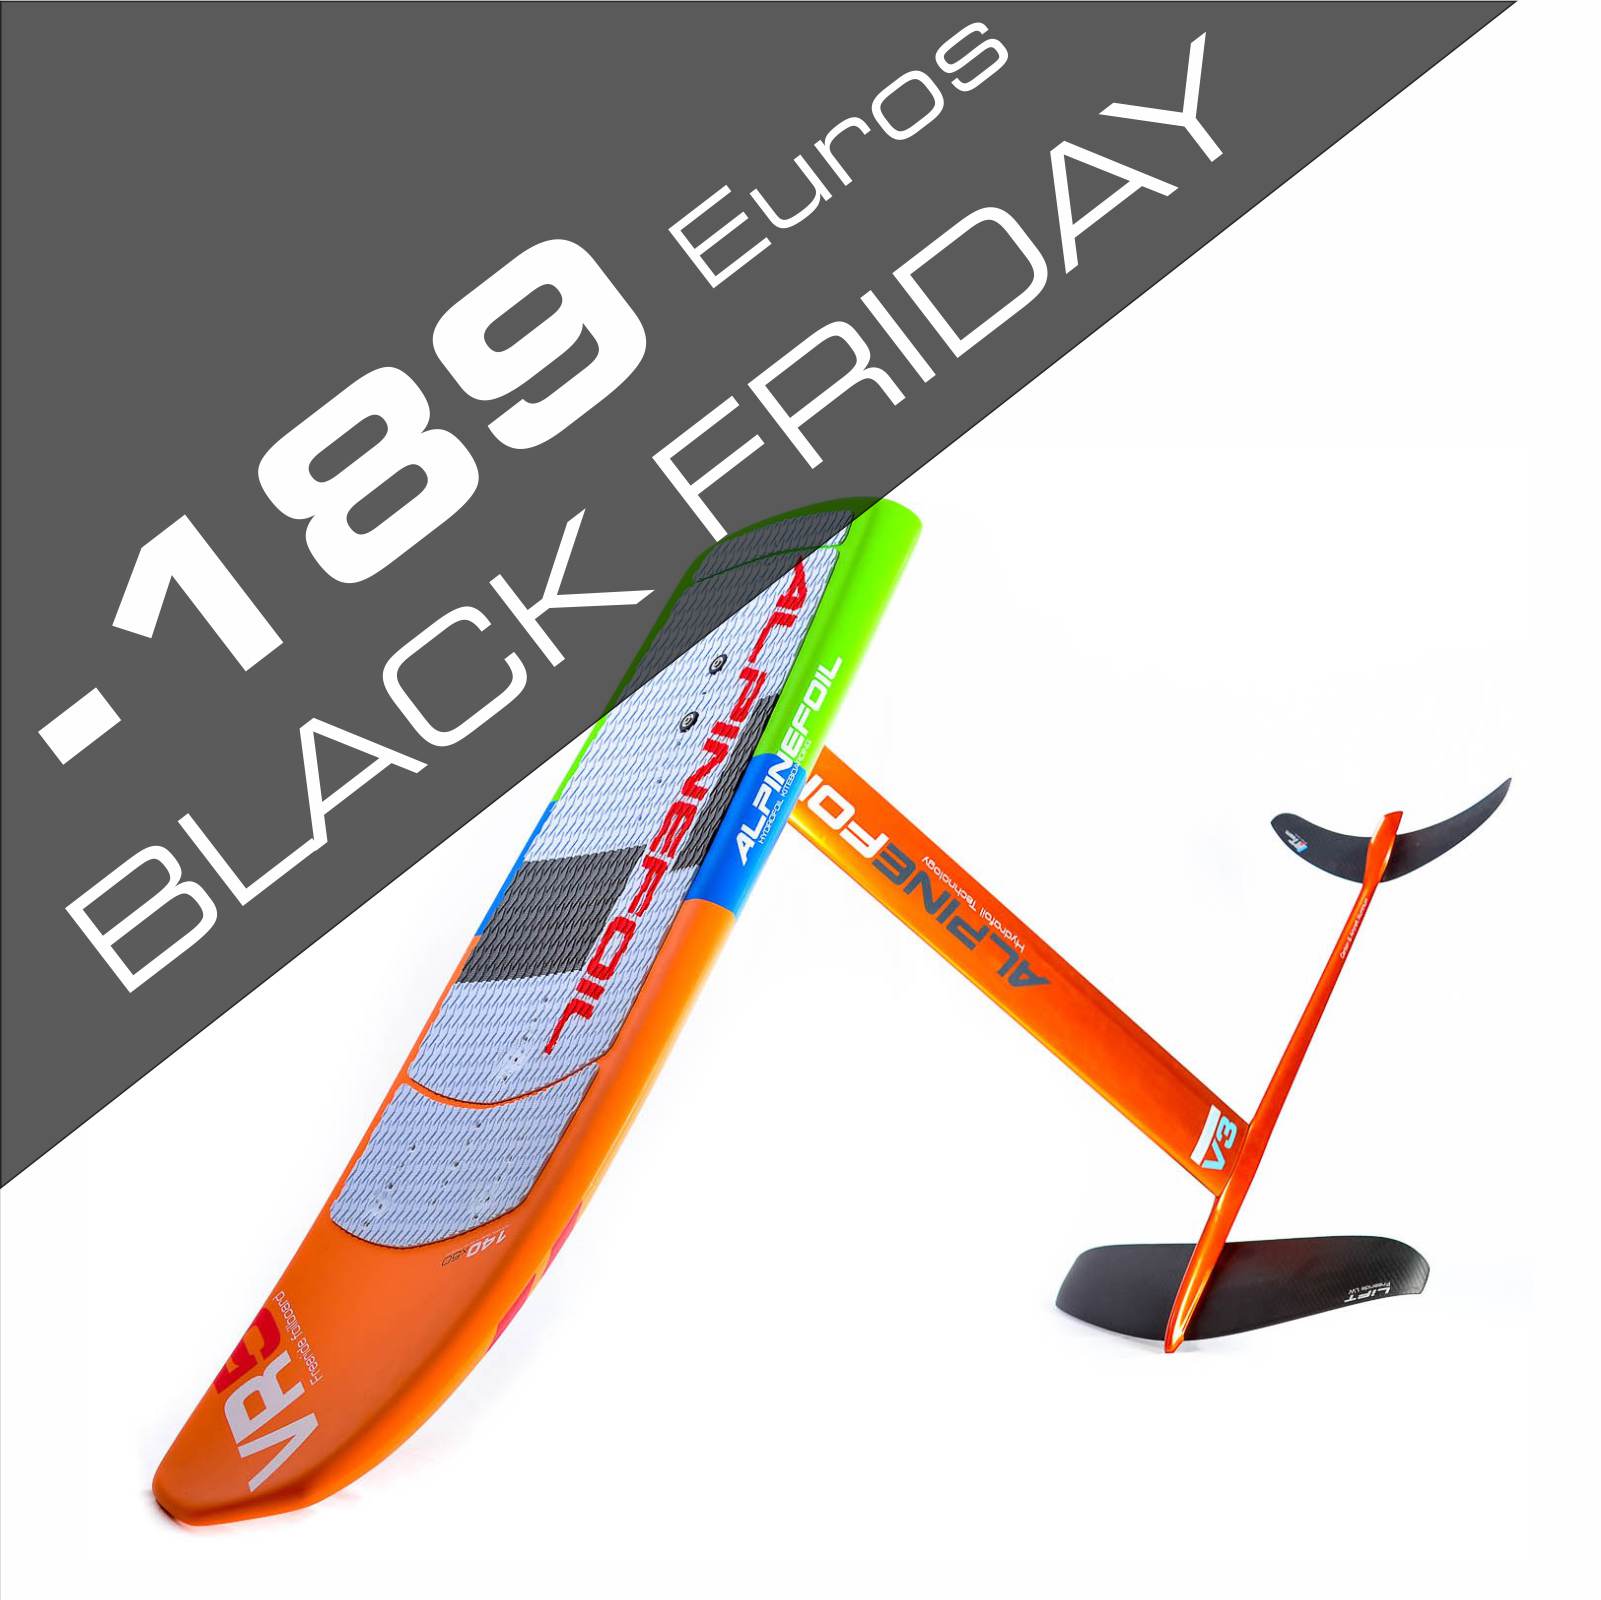 Black friday access v3 vr5 kitefoil board alpinefoil 8847